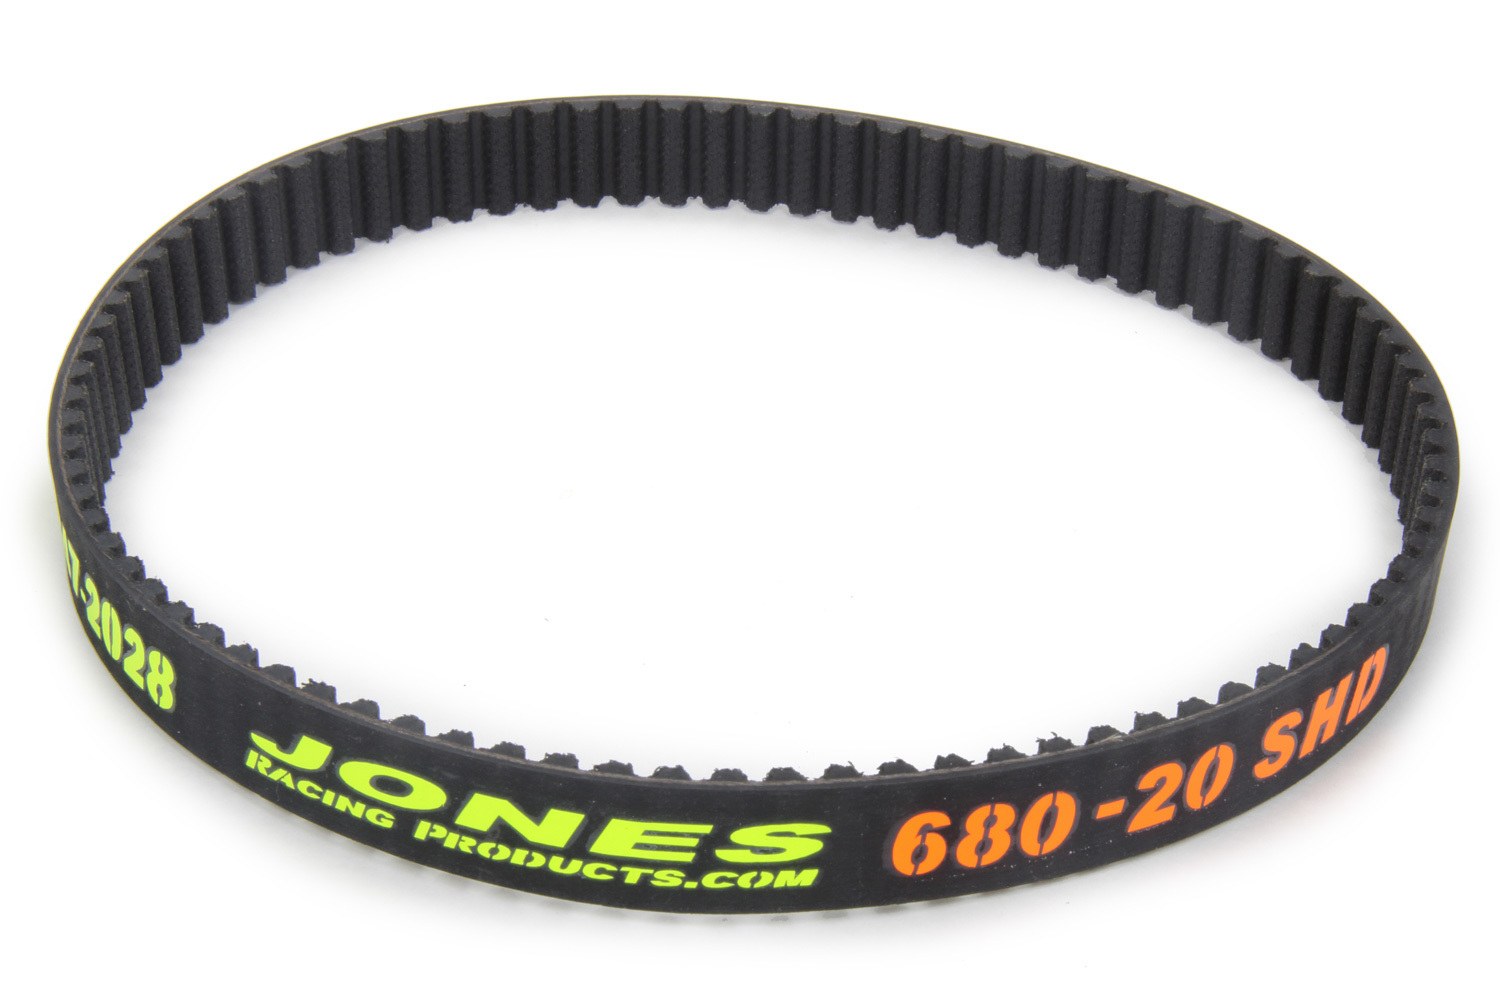 Jones Racing Products 680-20-SHD HTD Drive Belt, 26.772 in Long, 20 mm Wide, 8 mm Pitch, Each